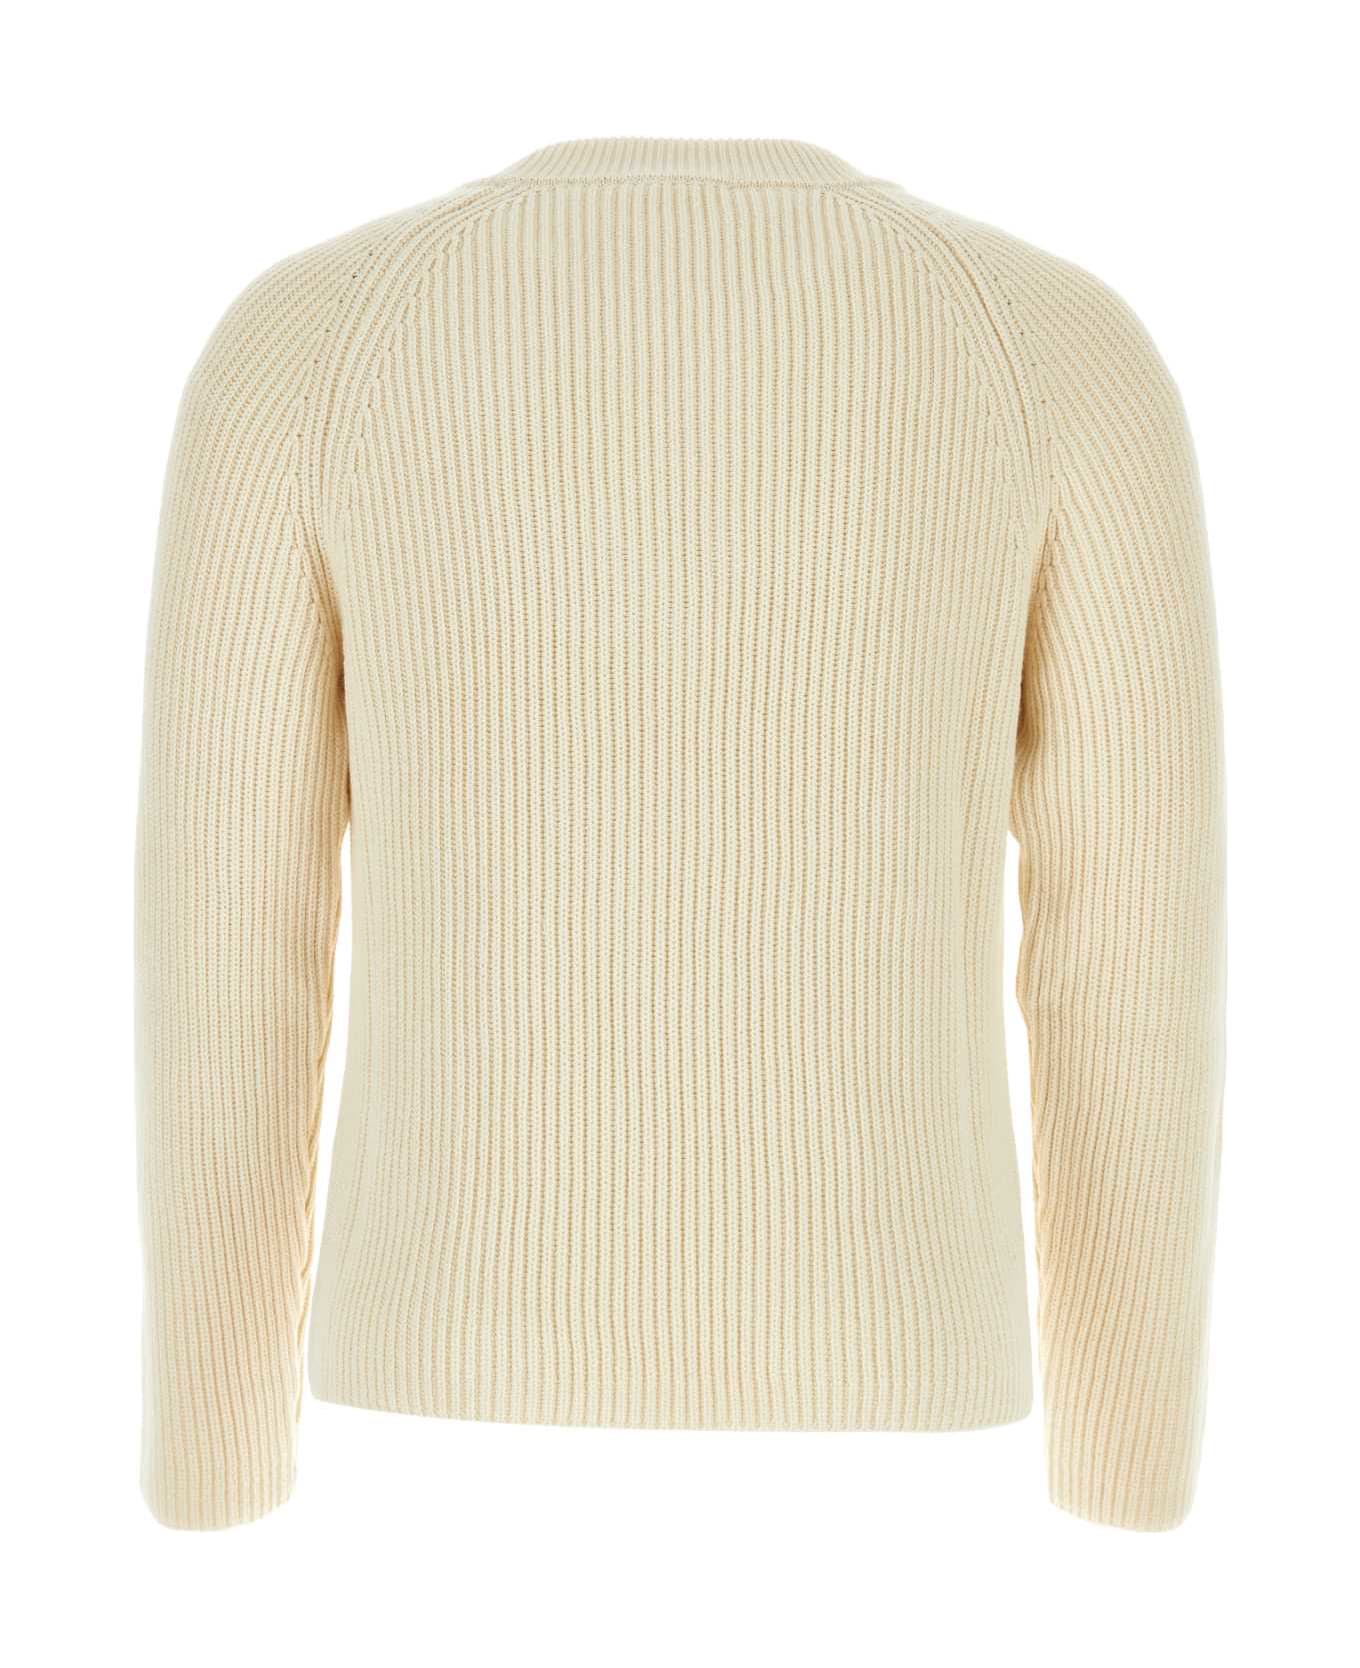 Ami Alexandre Mattiussi Ivory Cotton Blend Sweater - IVORY ニットウェア